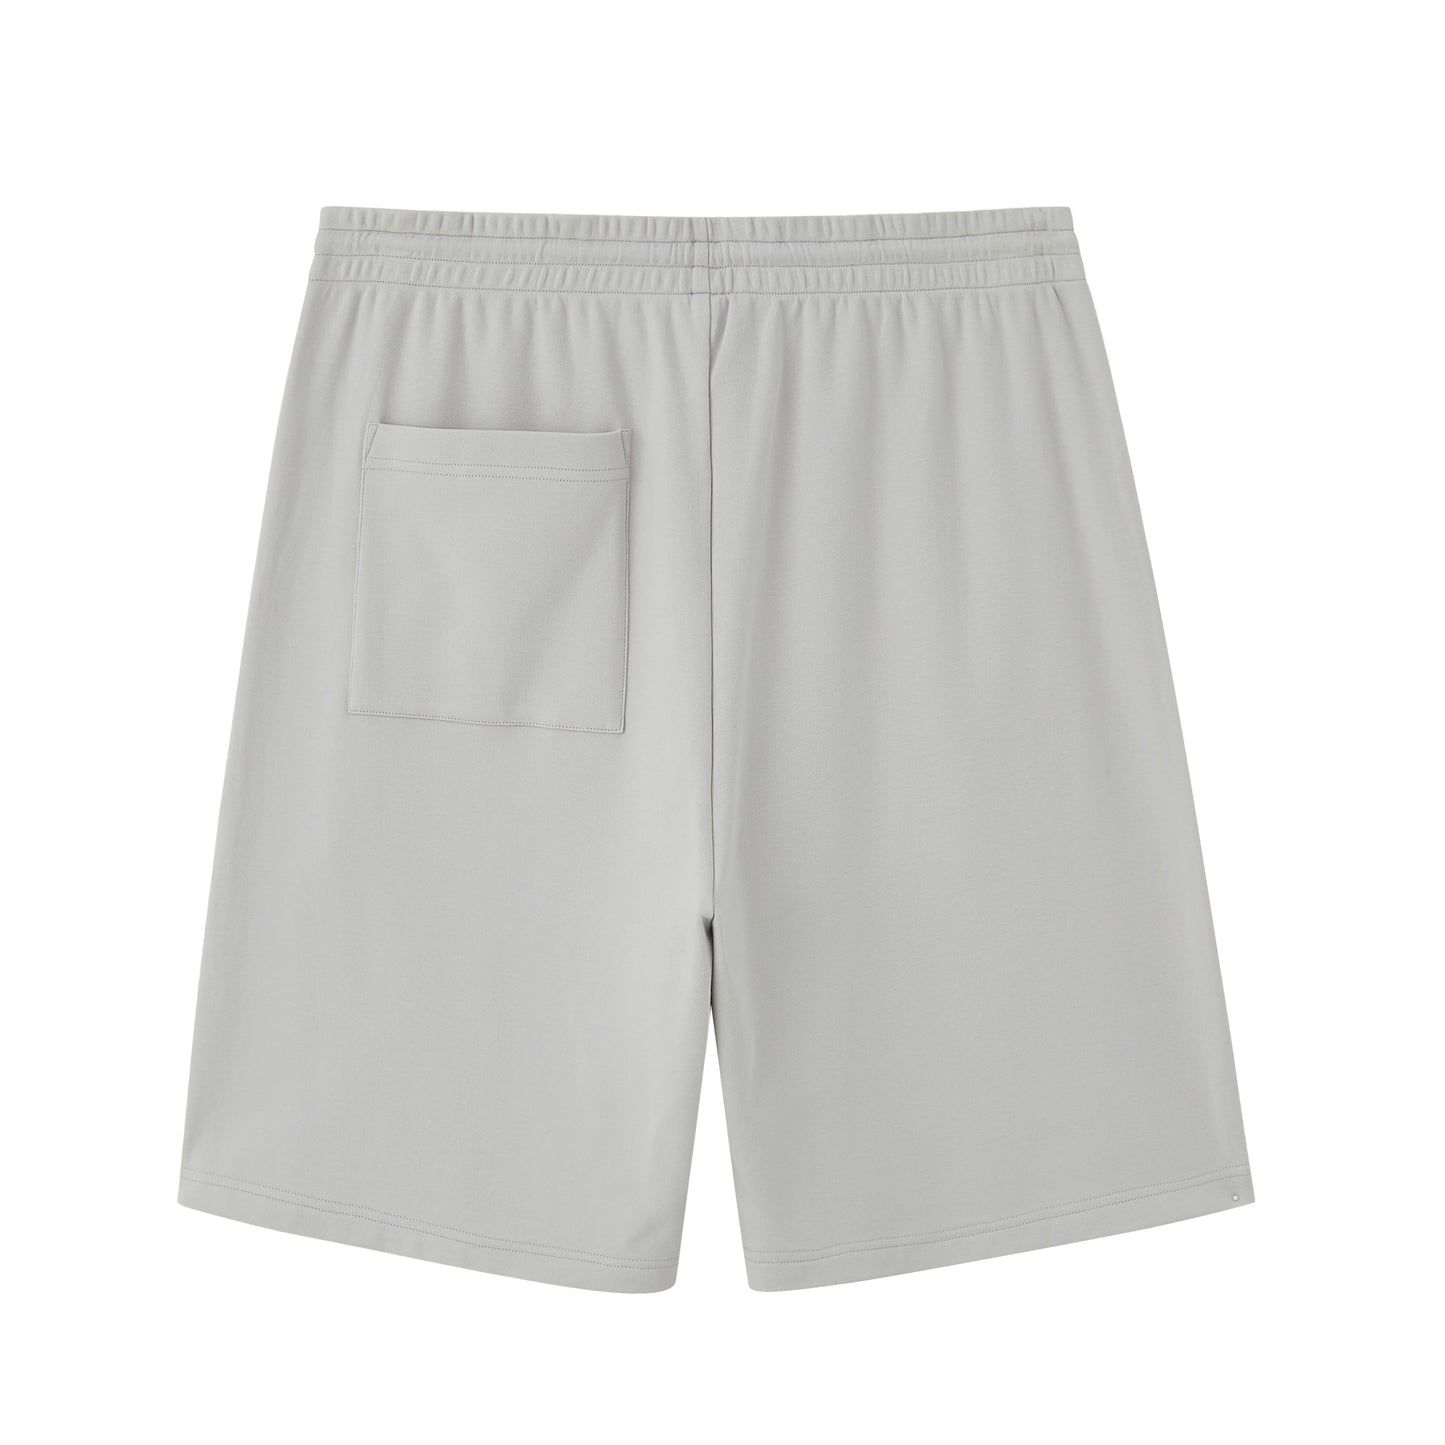 flat lay image of grey shorts from back